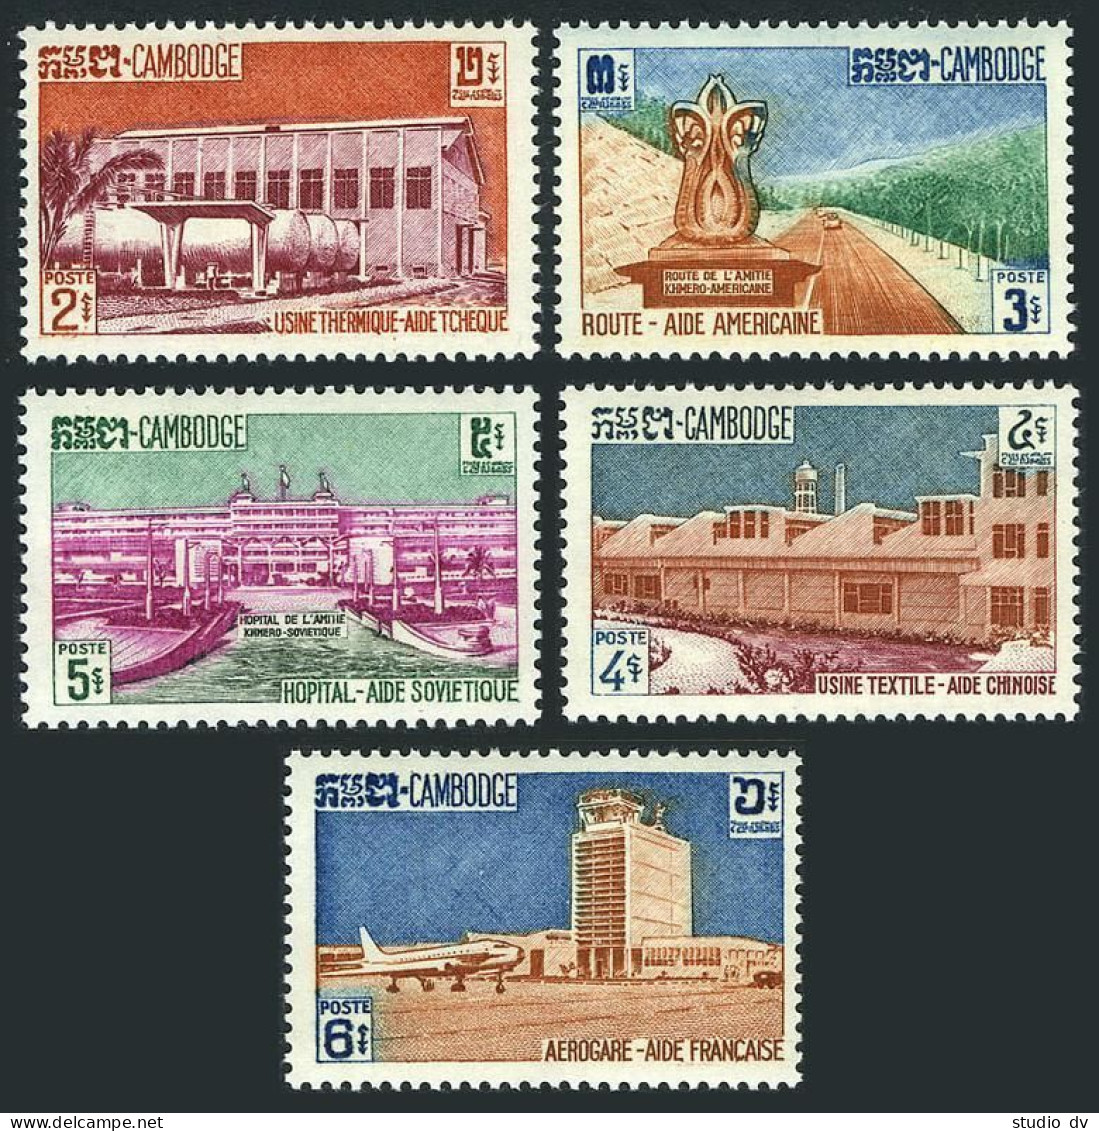 Cambodia 101-105, Hinged. Mi 132-136. Foreign Aid 1961. Power Station, Hospital, - Camboya